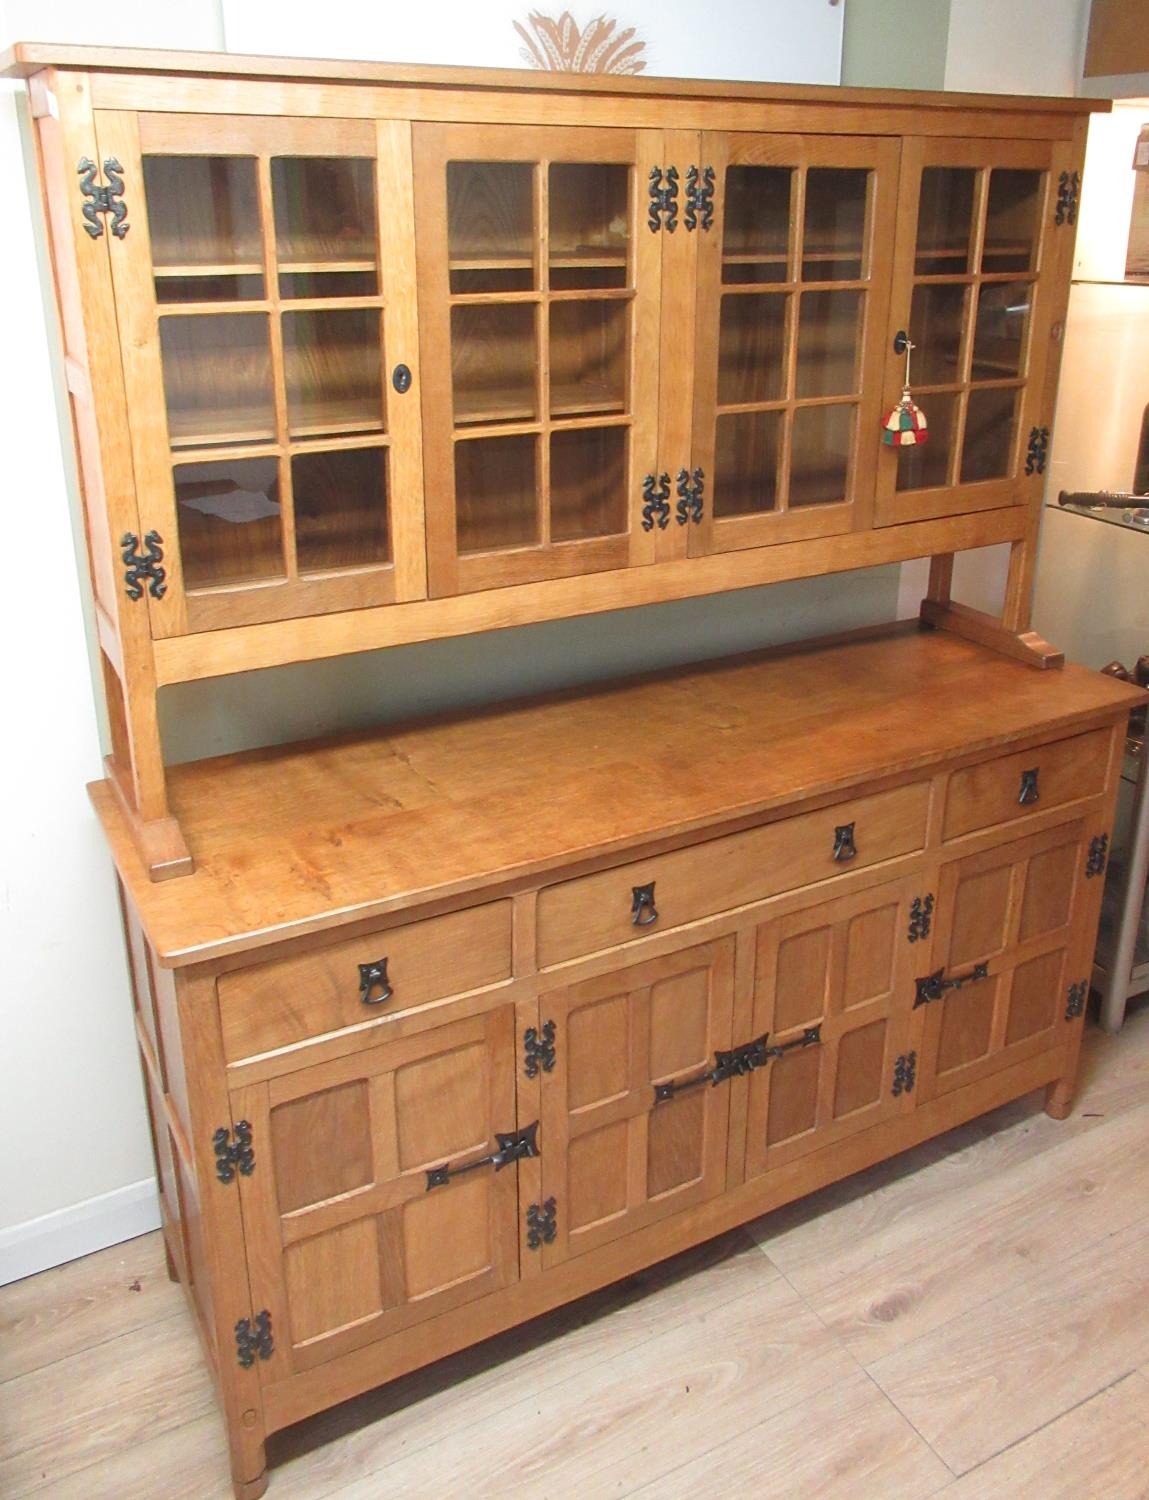 Alan Acornman Grainger, Acorn Industries Brandsby - an adzed panelled oak dresser, raised back